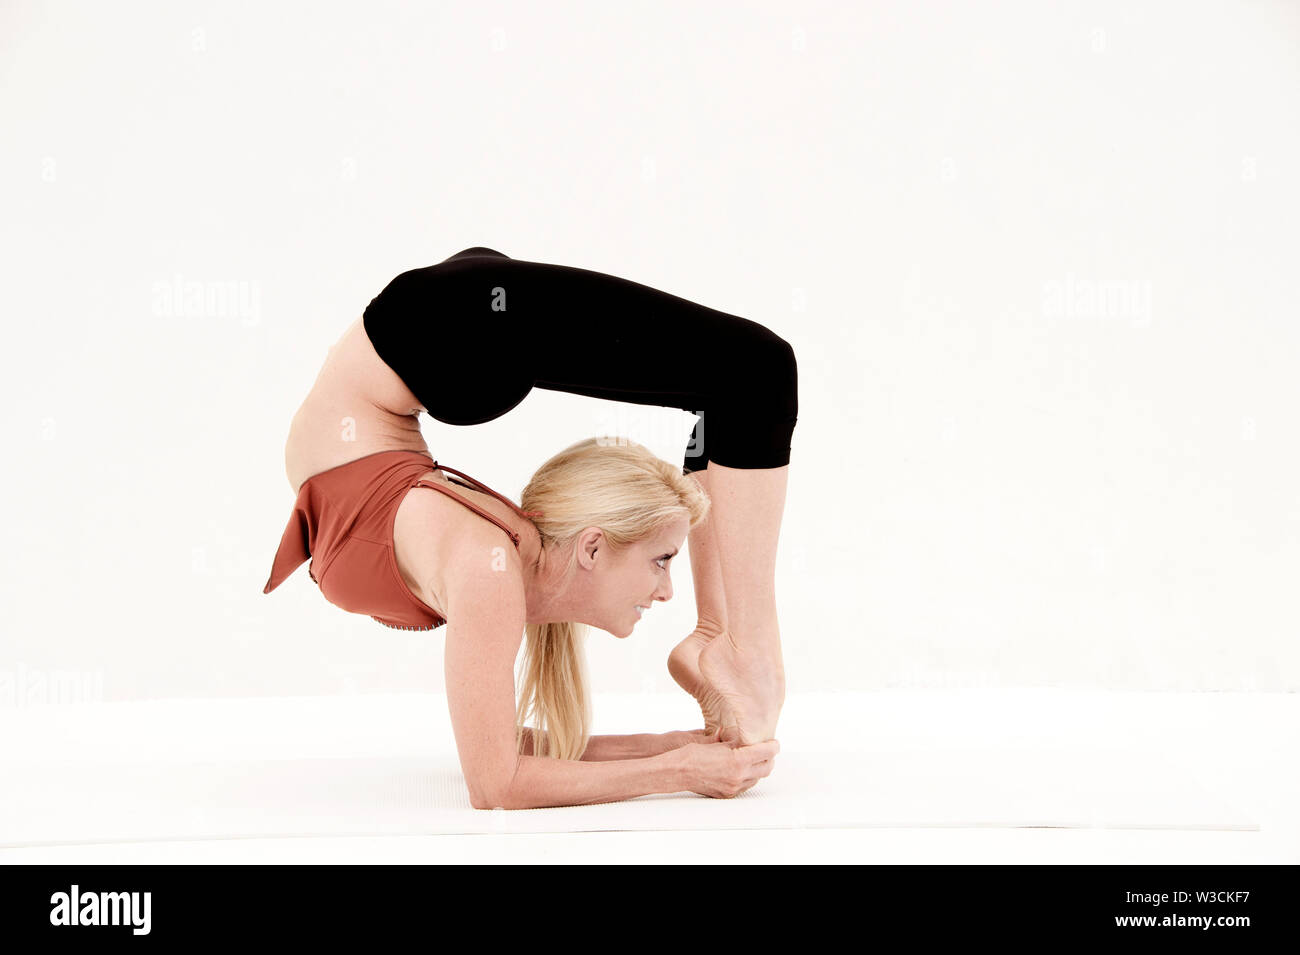 5 Yoga Poses to Increase Energy - Blog - Yogamatters